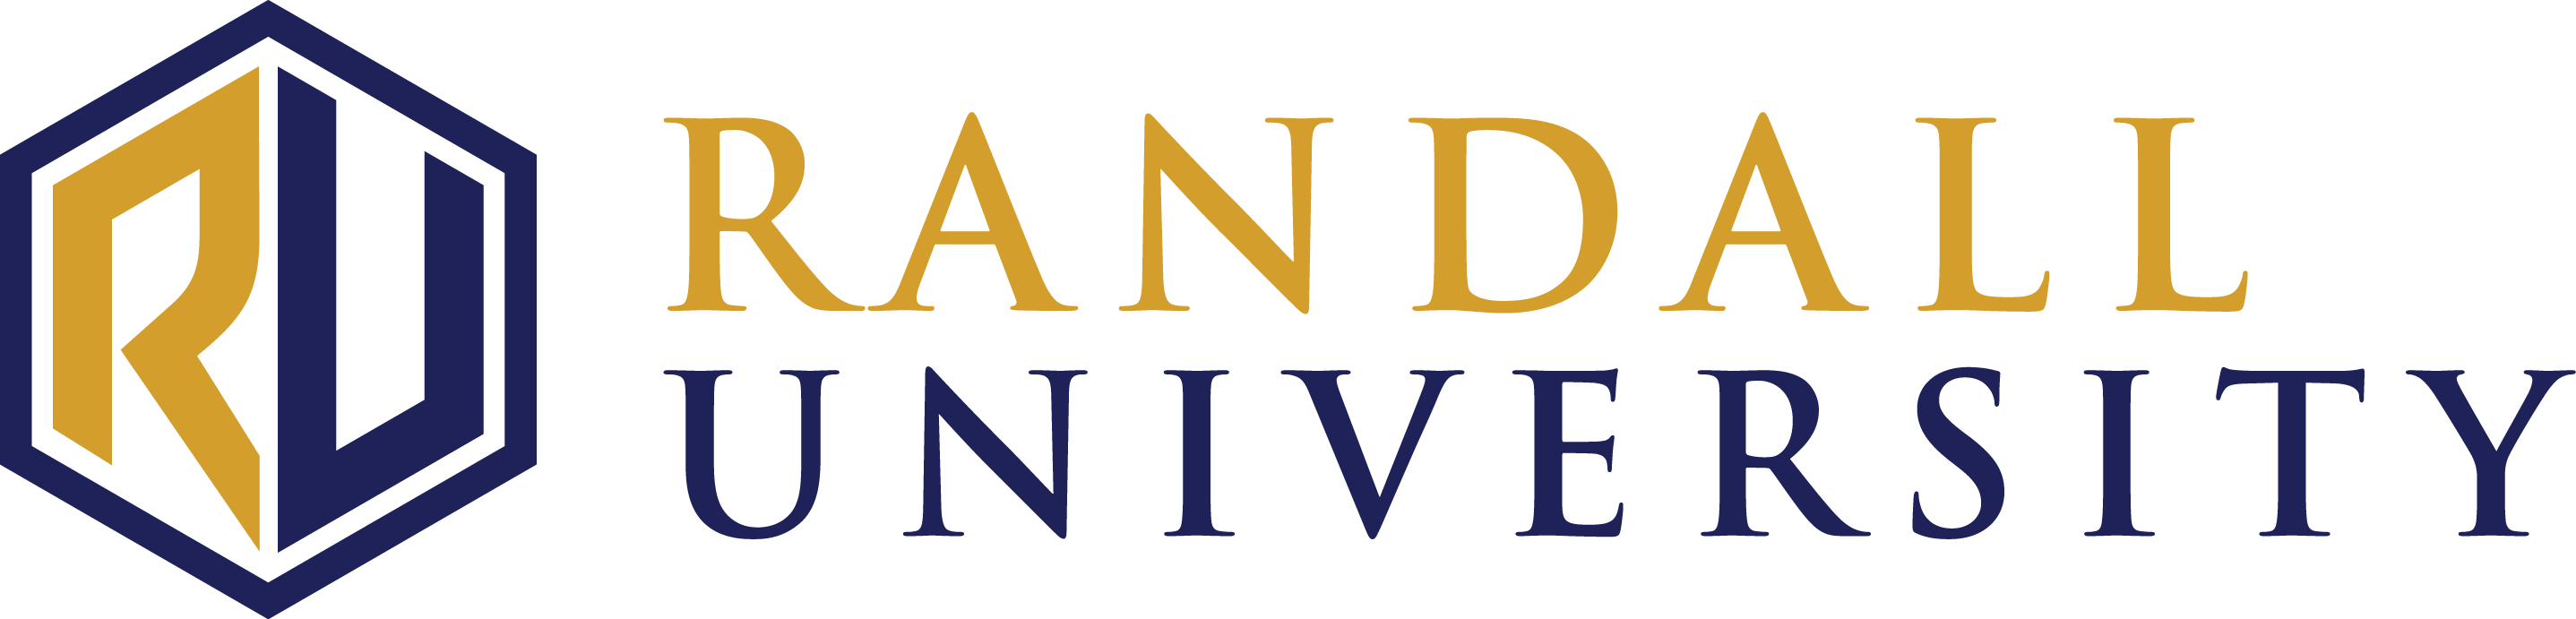 Class Schedules - Randall University